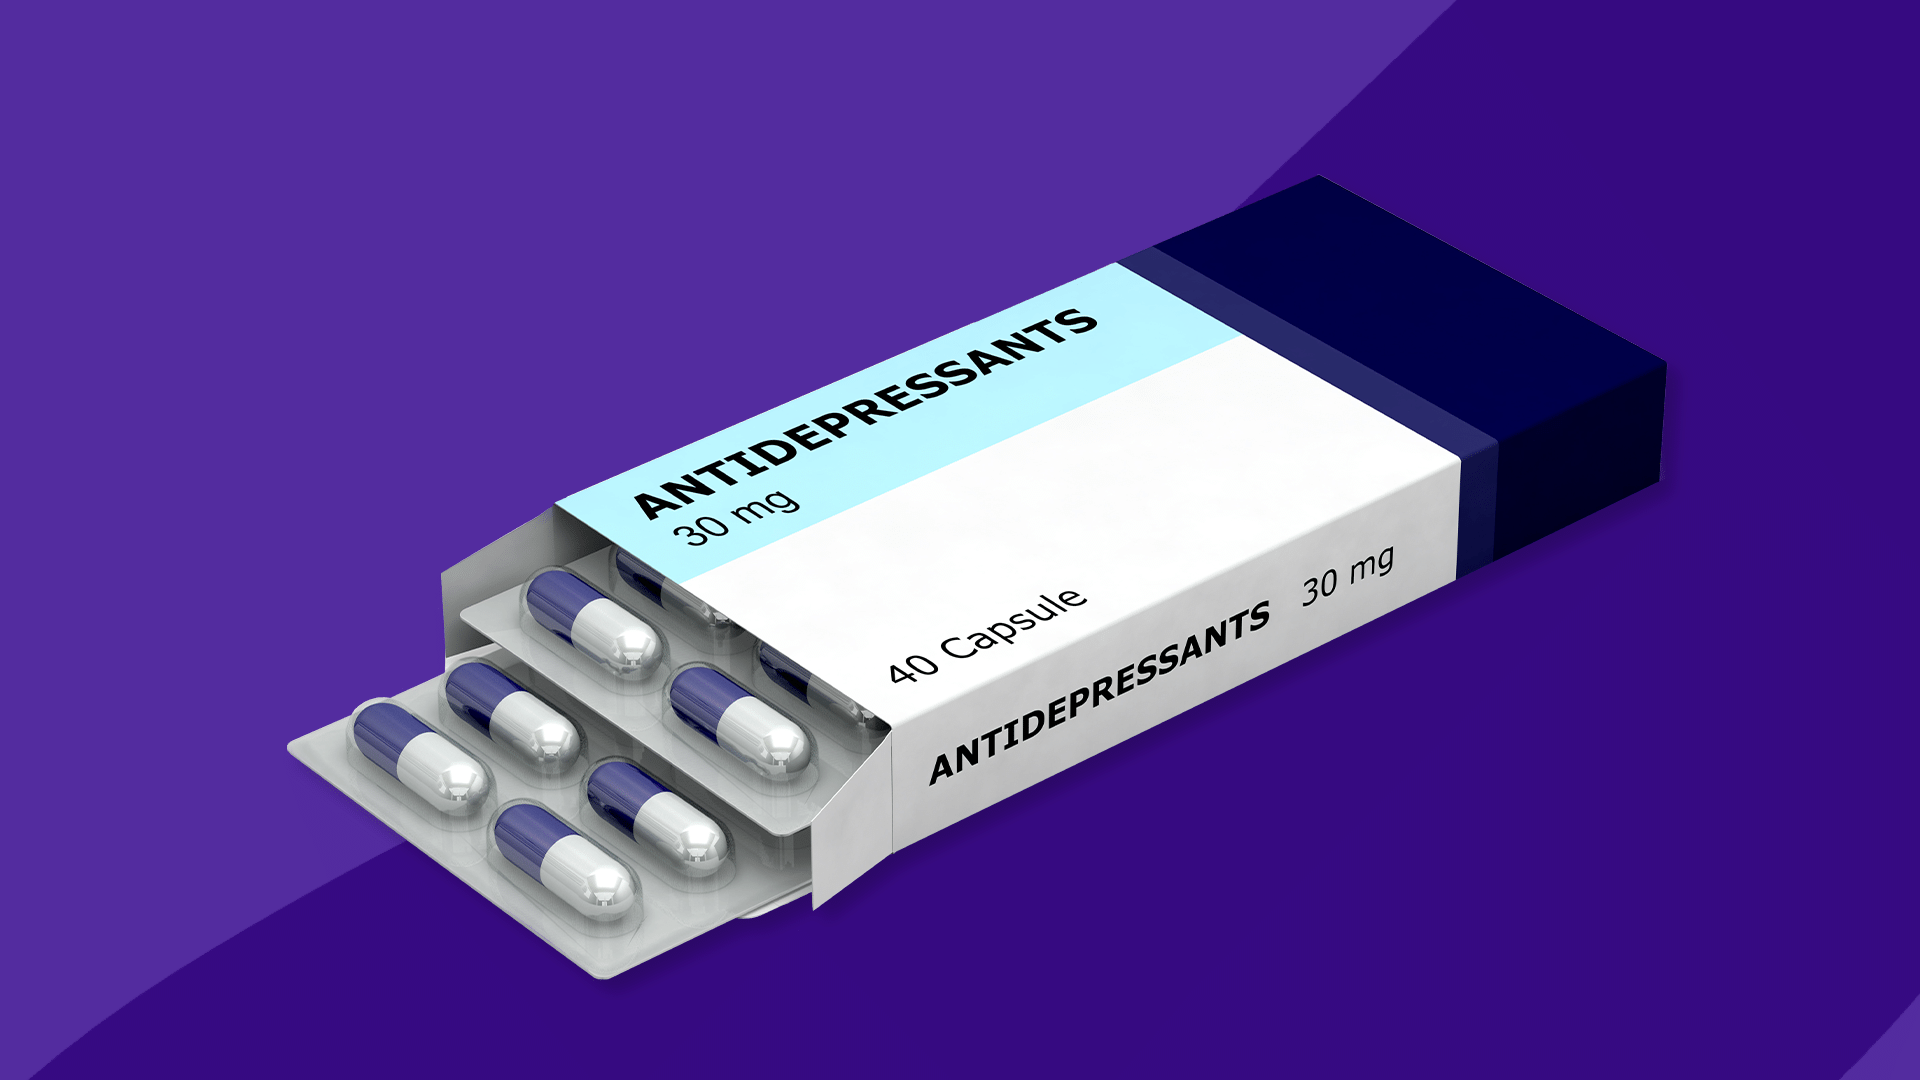 Effective anti-depressant medications